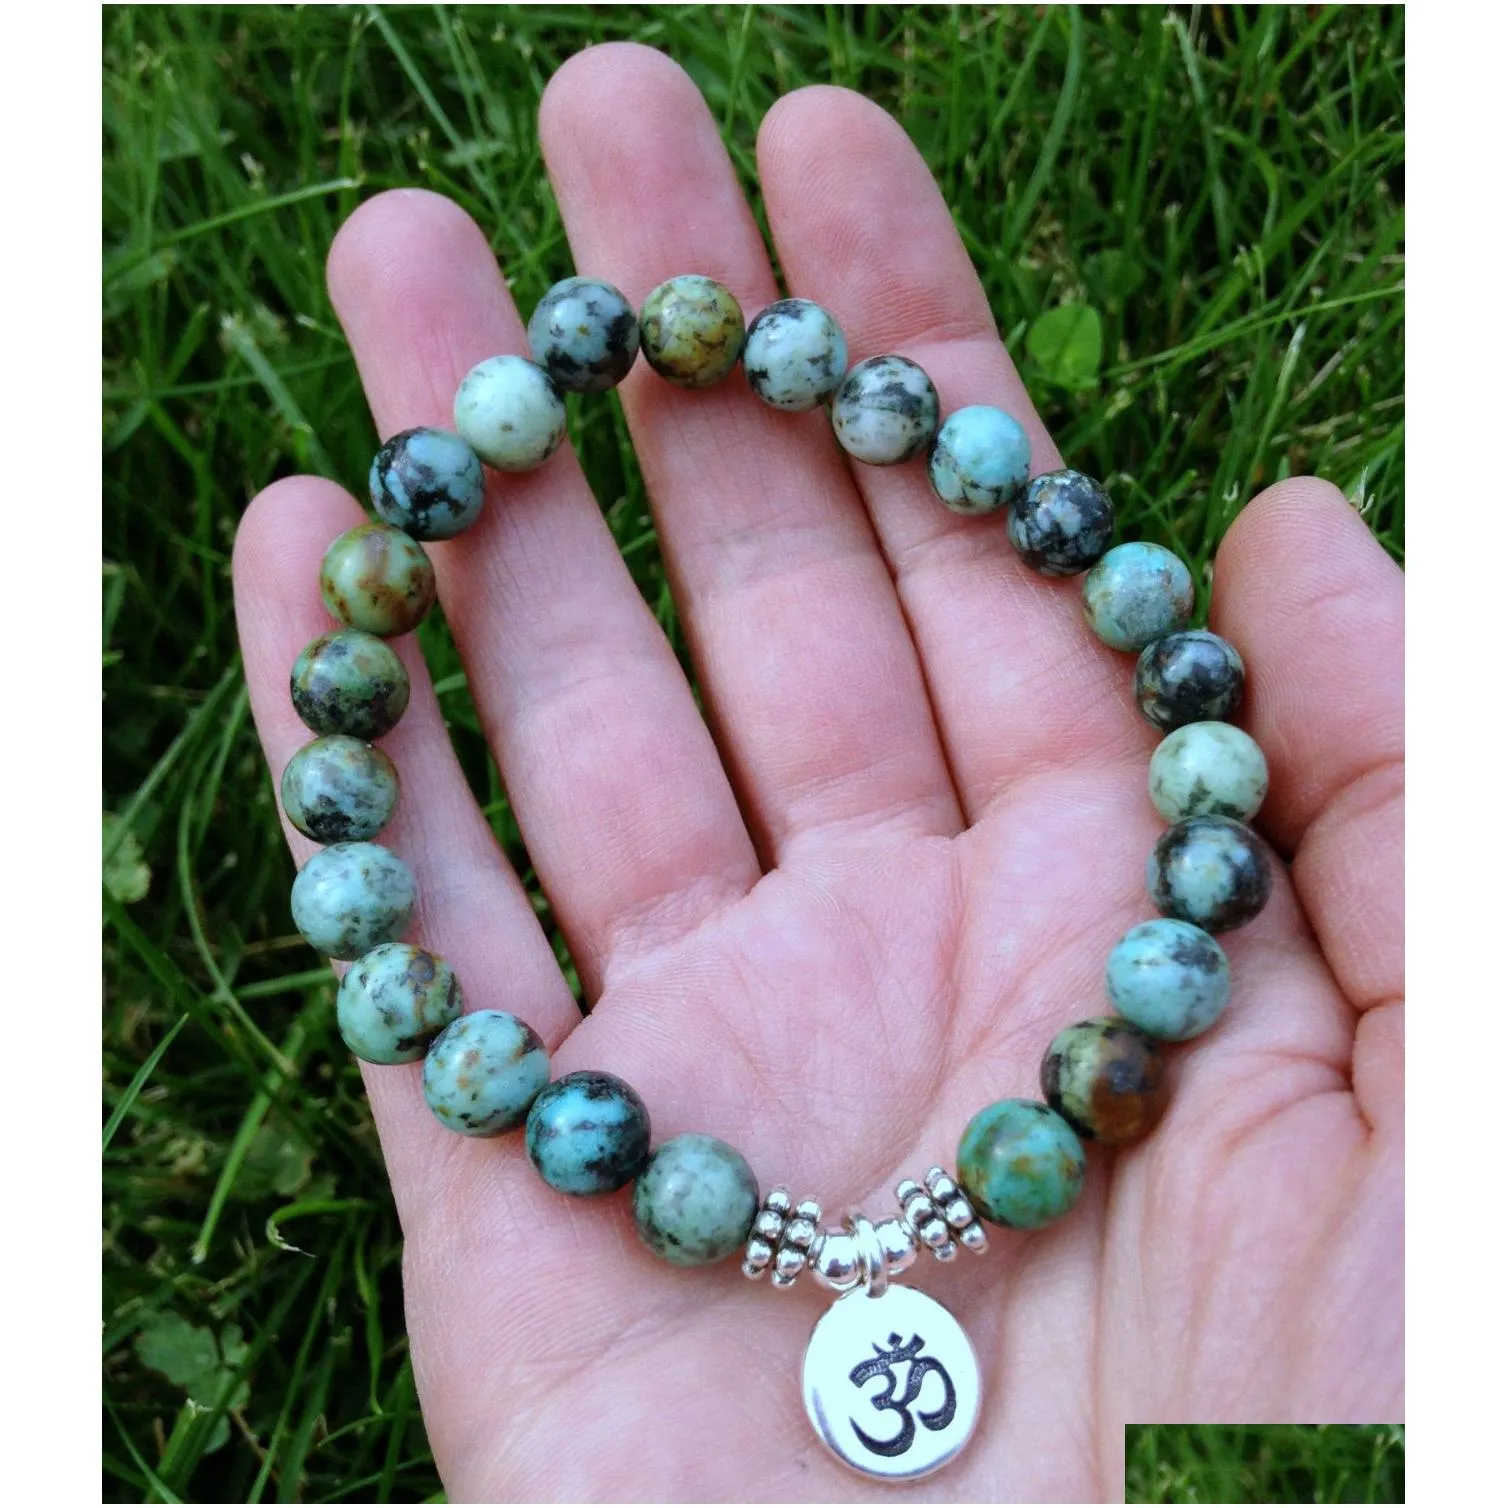 SN1035 Genuine African Turquoise Wrist Mala Beads Chakra Bracelet Yoga Bracelet Buddhist Prayer Healing Depression Anxiety Crystals